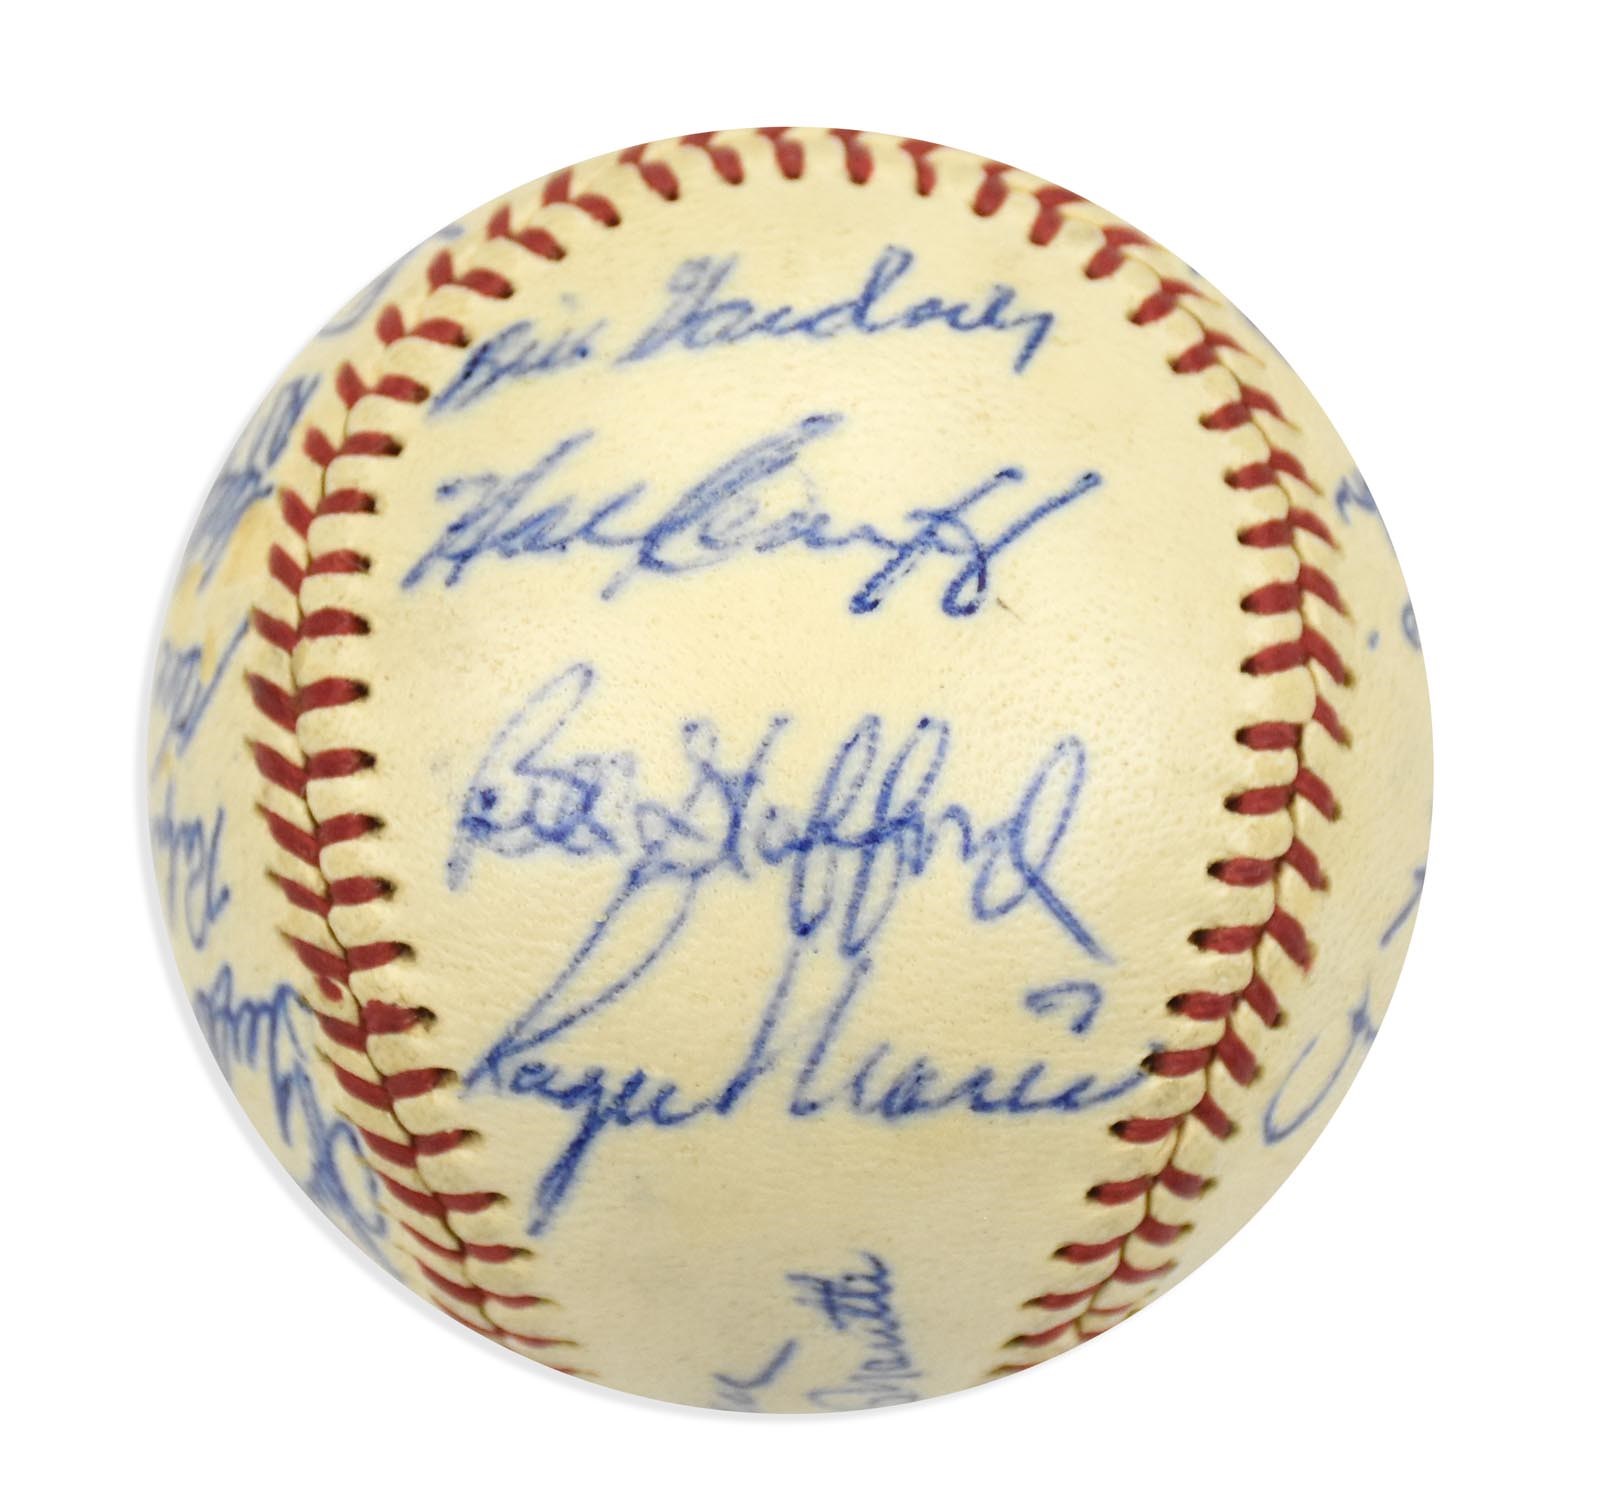 NY Yankees, Giants & Mets - 1961 World Champion New York Yankees Team Signed Baseball (PSA)